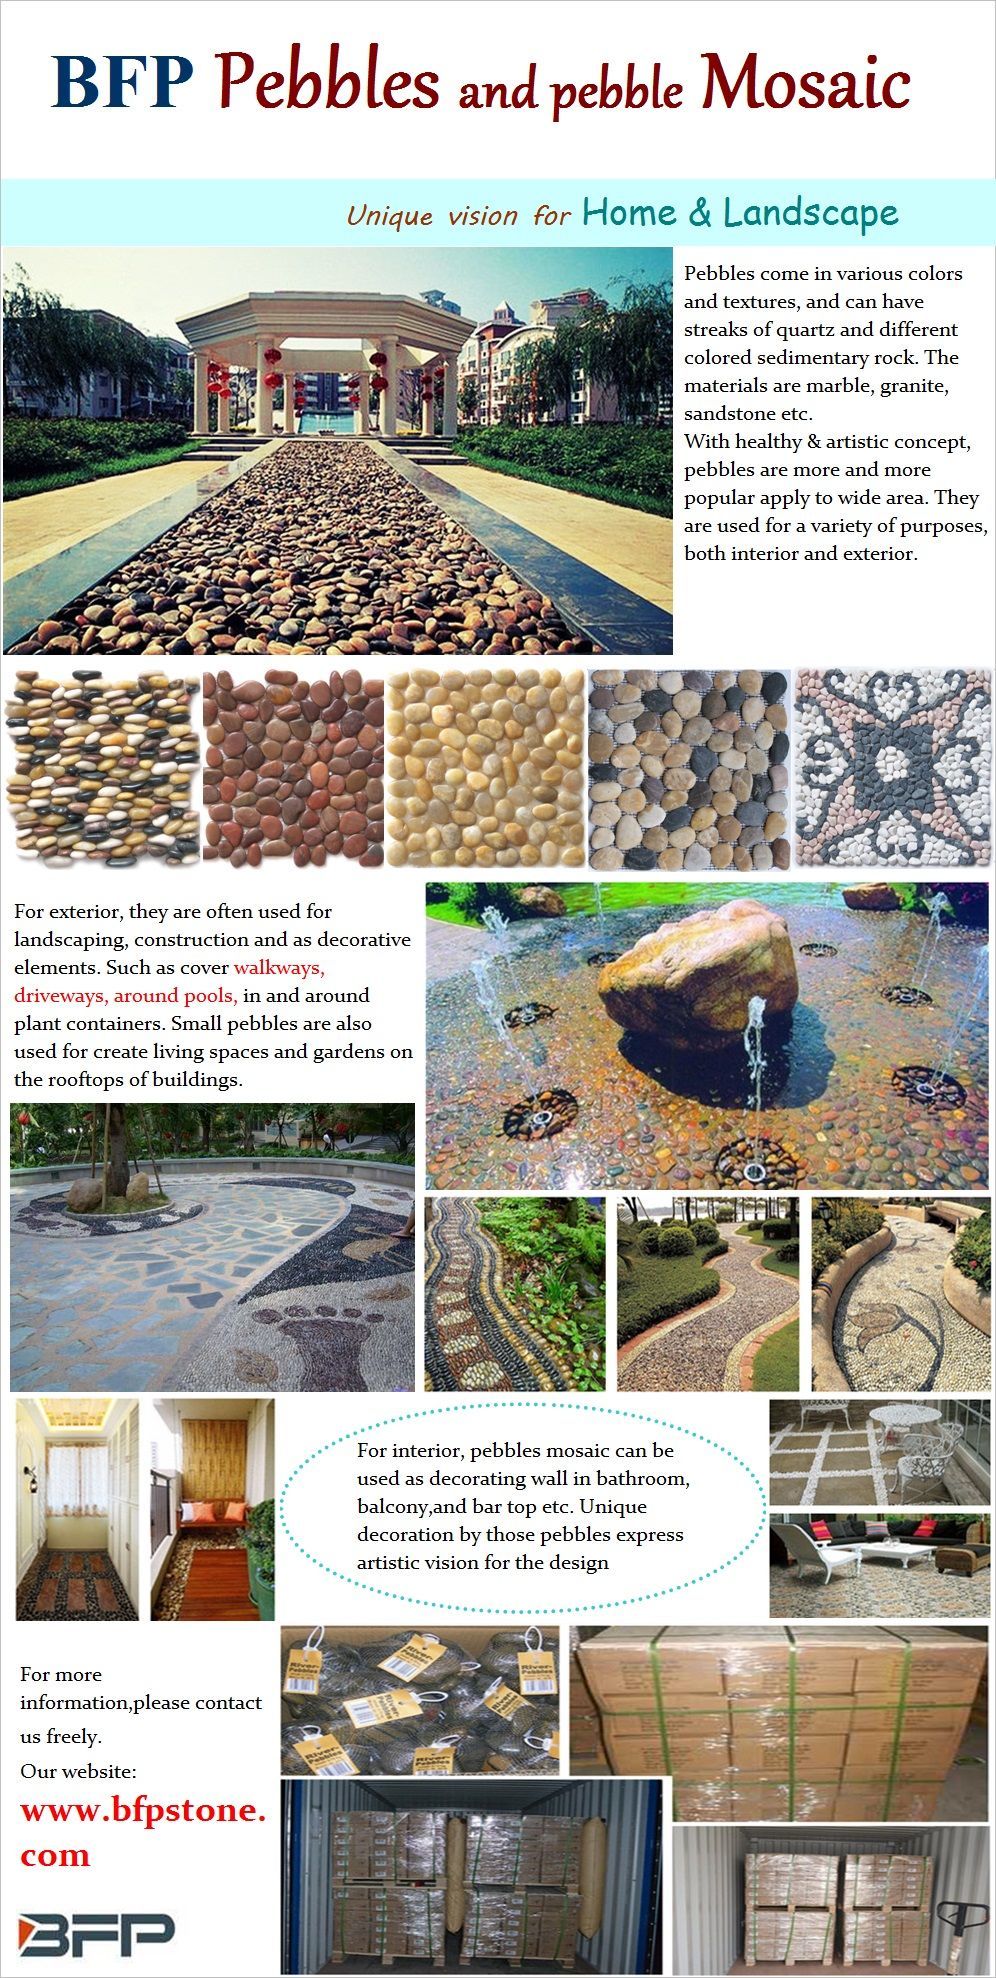 BFP Pebbles and Pebble Mosaic.jpg